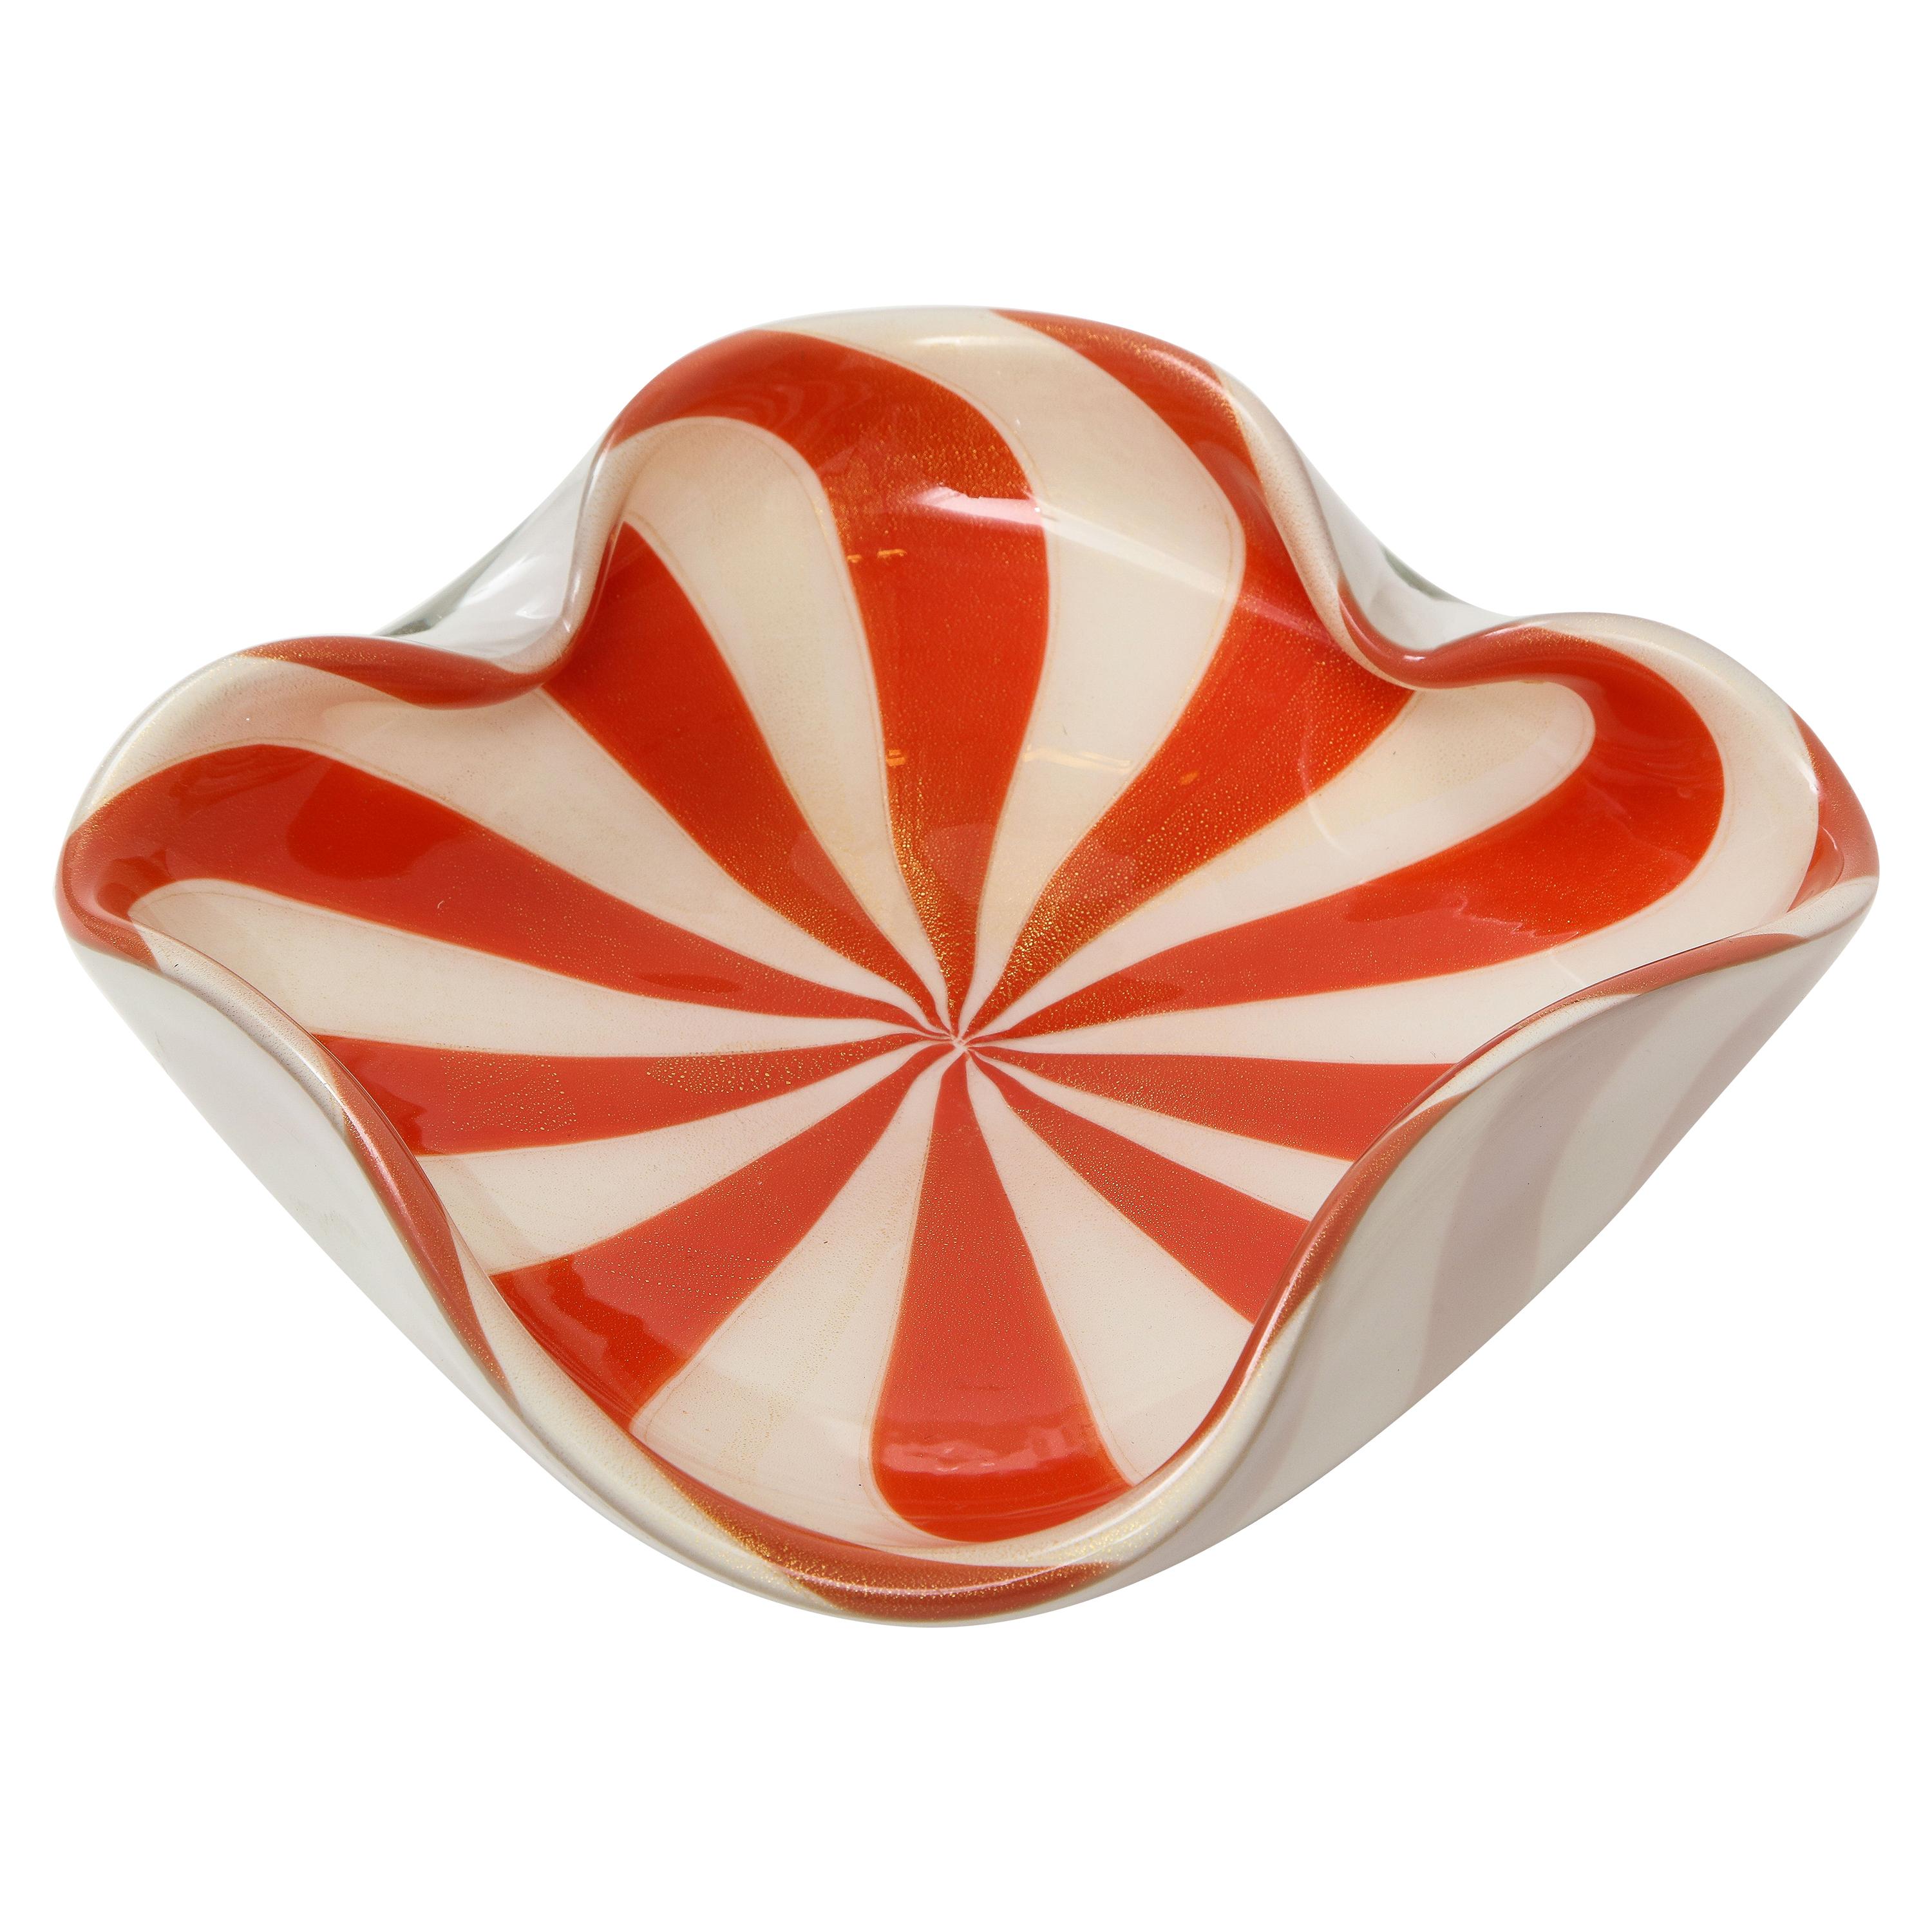 1960's Mid-Century Modern Murano Glass Decorative Bowl